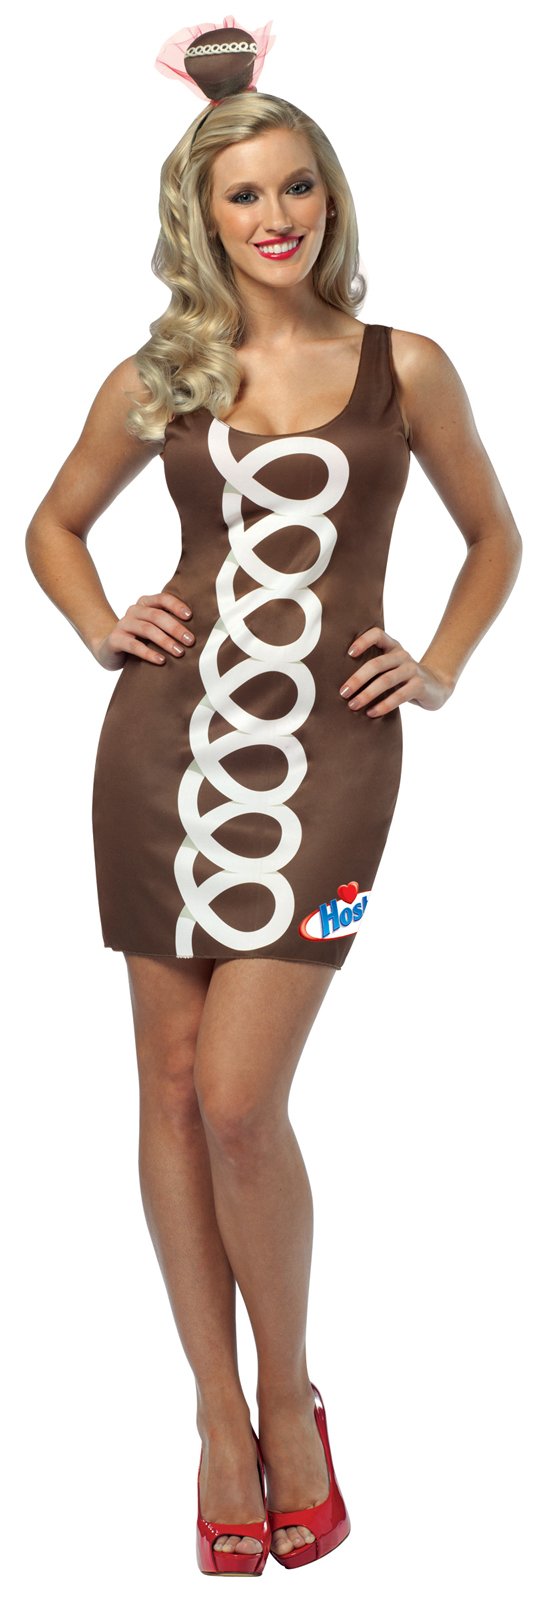 Hostess - Cupcake Dress Adult Costume - Click Image to Close